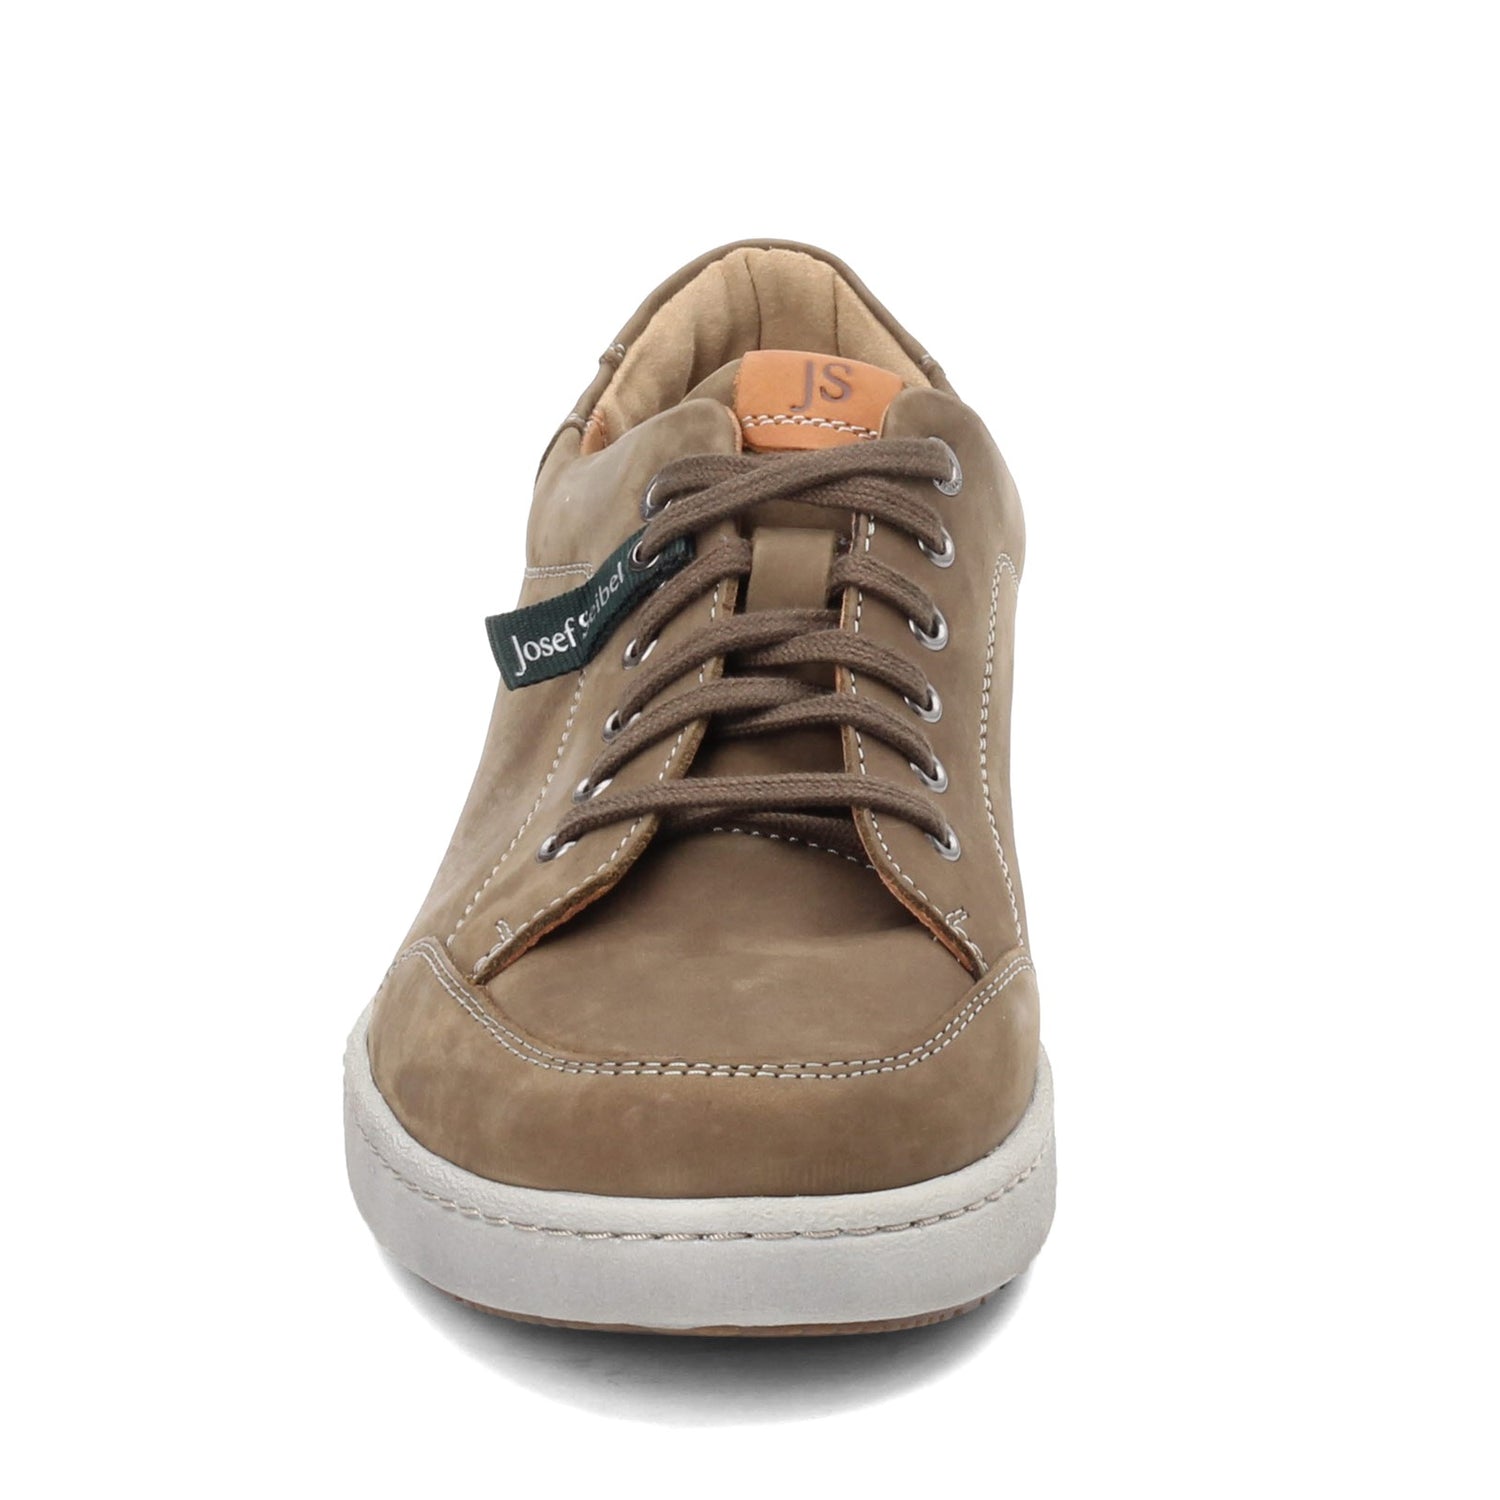 Peltz Shoes  Men's Josef Seibel David 03 Sneaker OLIVE 26403-21631